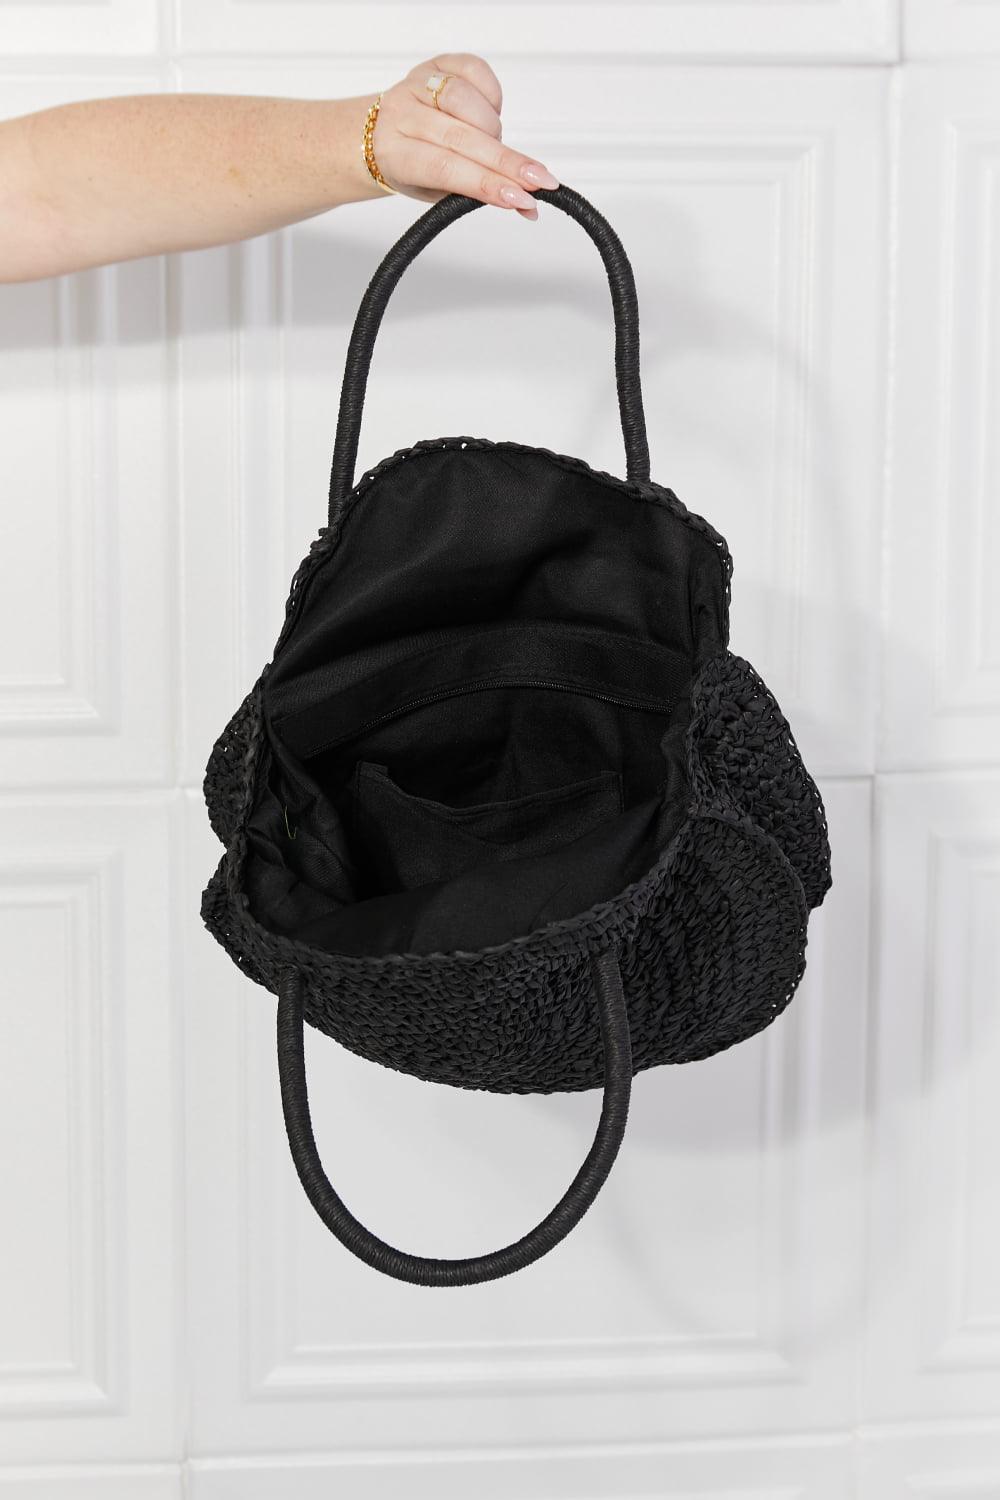 Justin Taylor Beach Date Straw Rattan Handbag in Black - The Fiery Jasmine